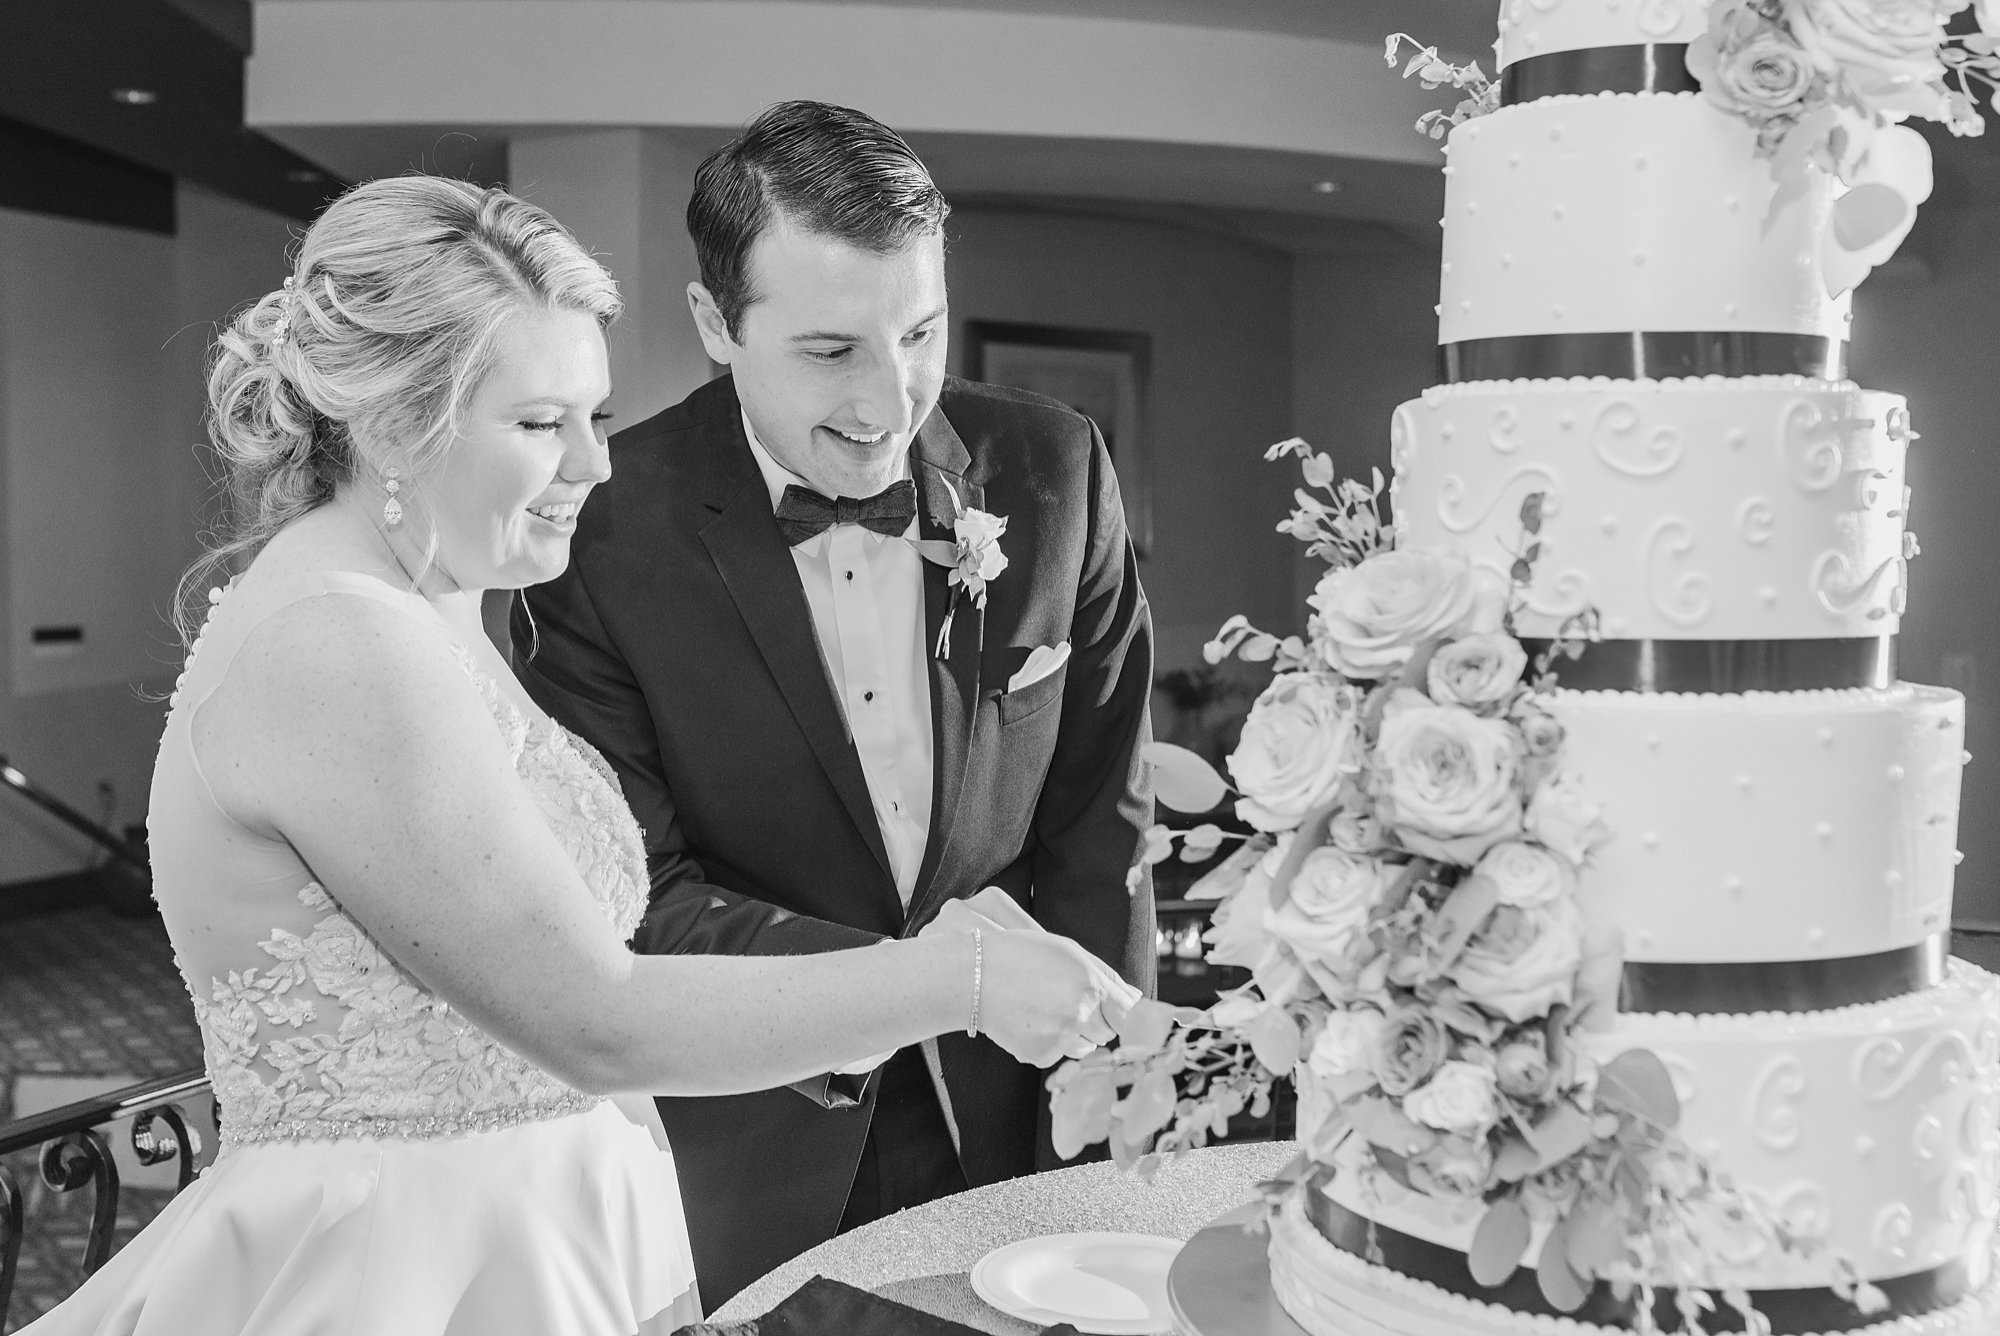 newlyweds cut wedding cake at The Club at Corazon wedding reception